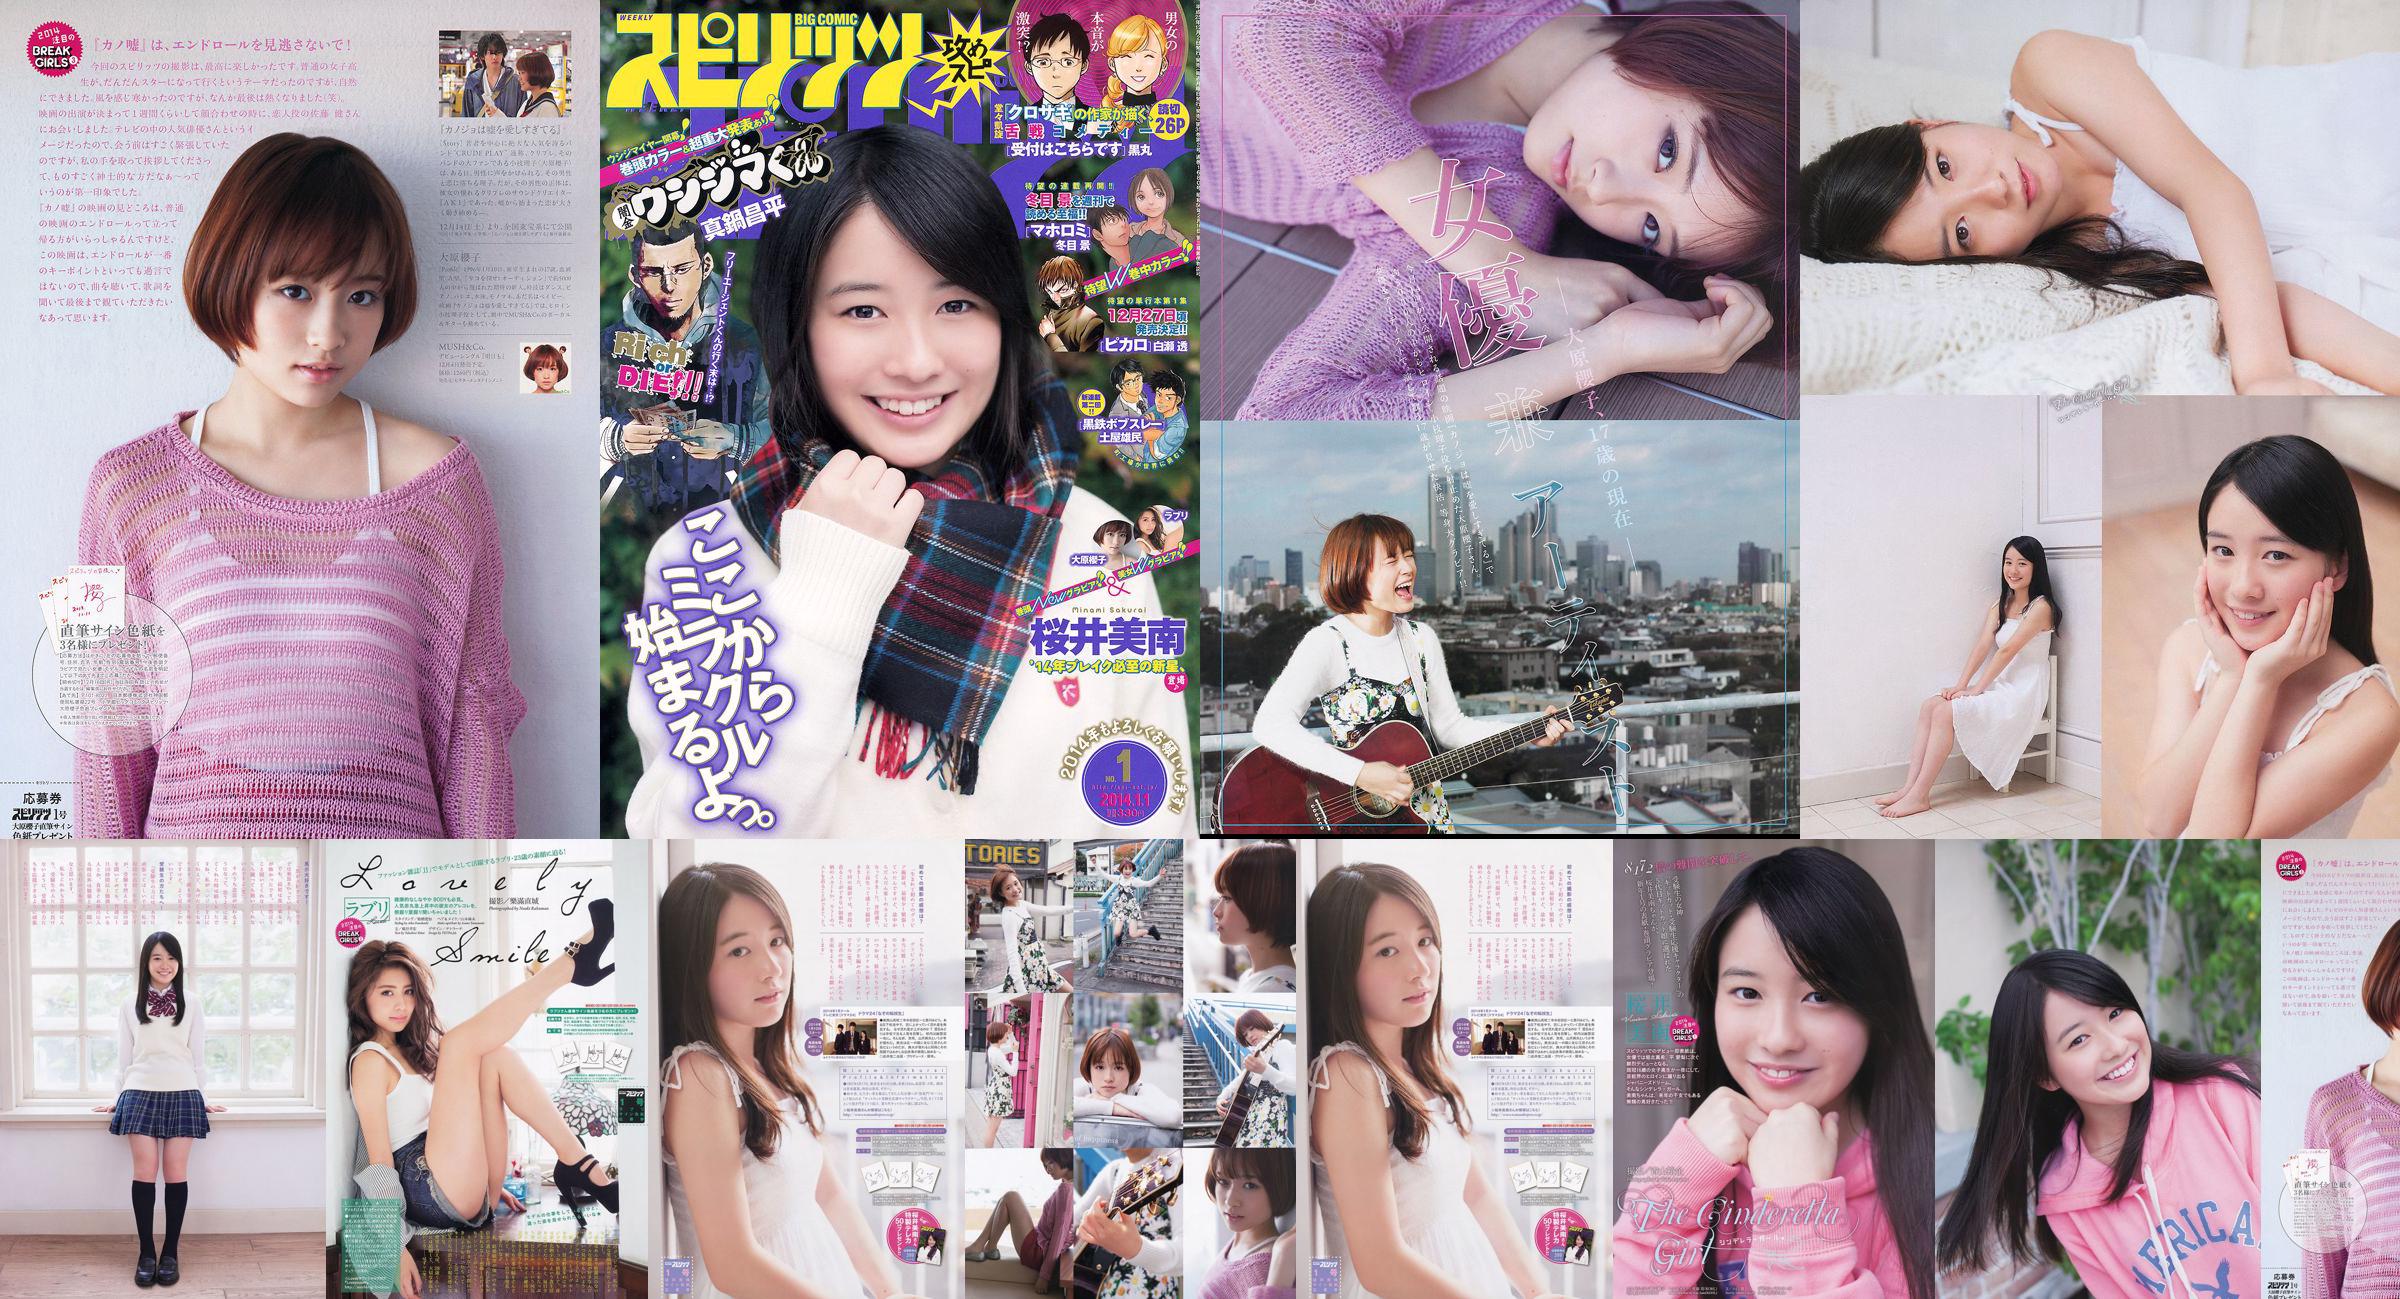 [Grands esprits de la bande dessinée hebdomadaire] Sakurai Minan Ohara Sakurako 2014 Magazine photo n ° 01 No.3531a1 Page 3